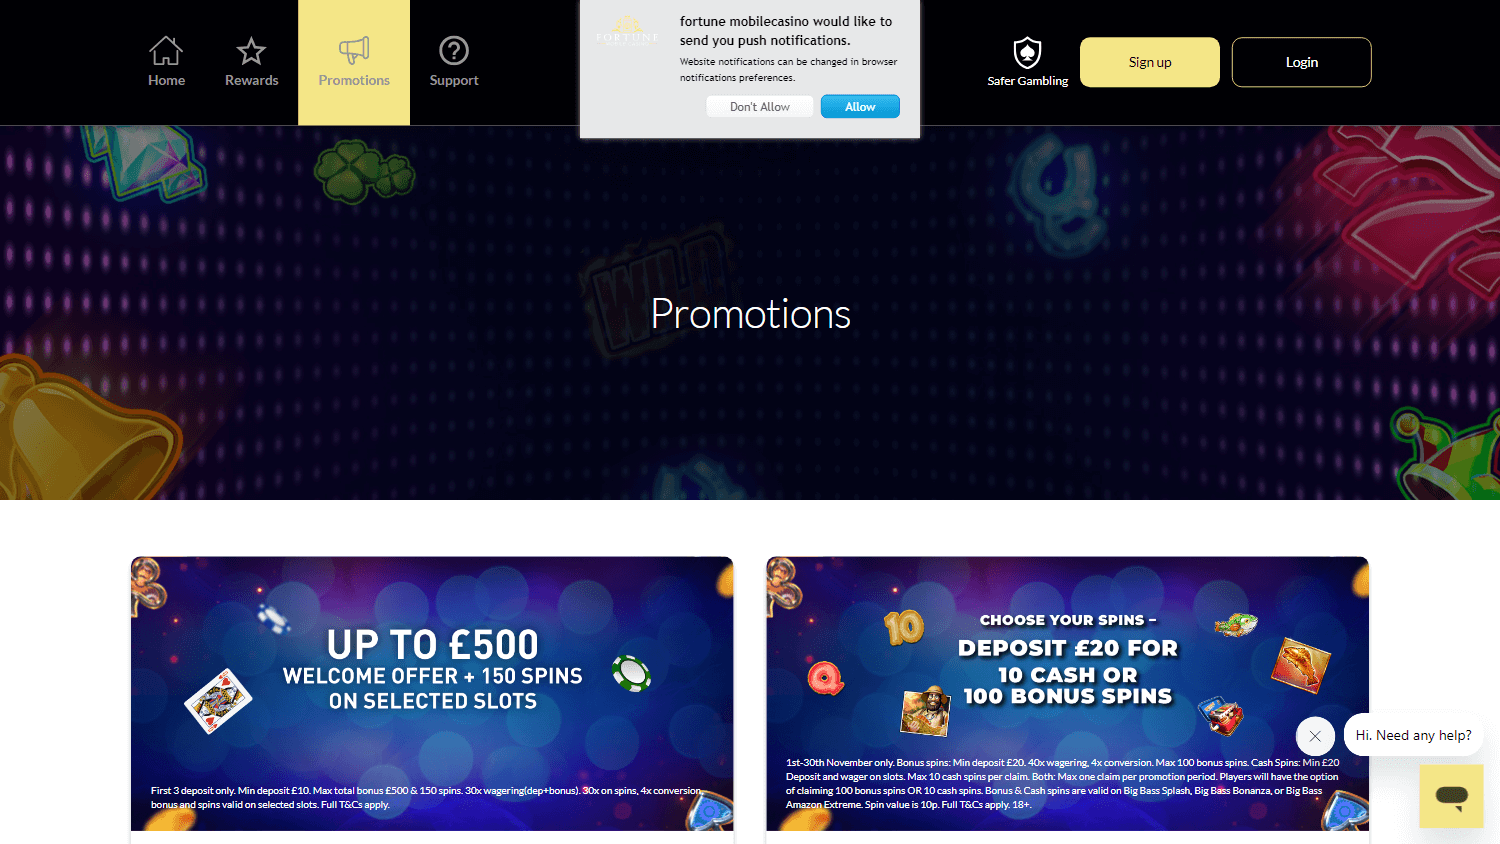 fortune_mobile_casino_promotions_desktop